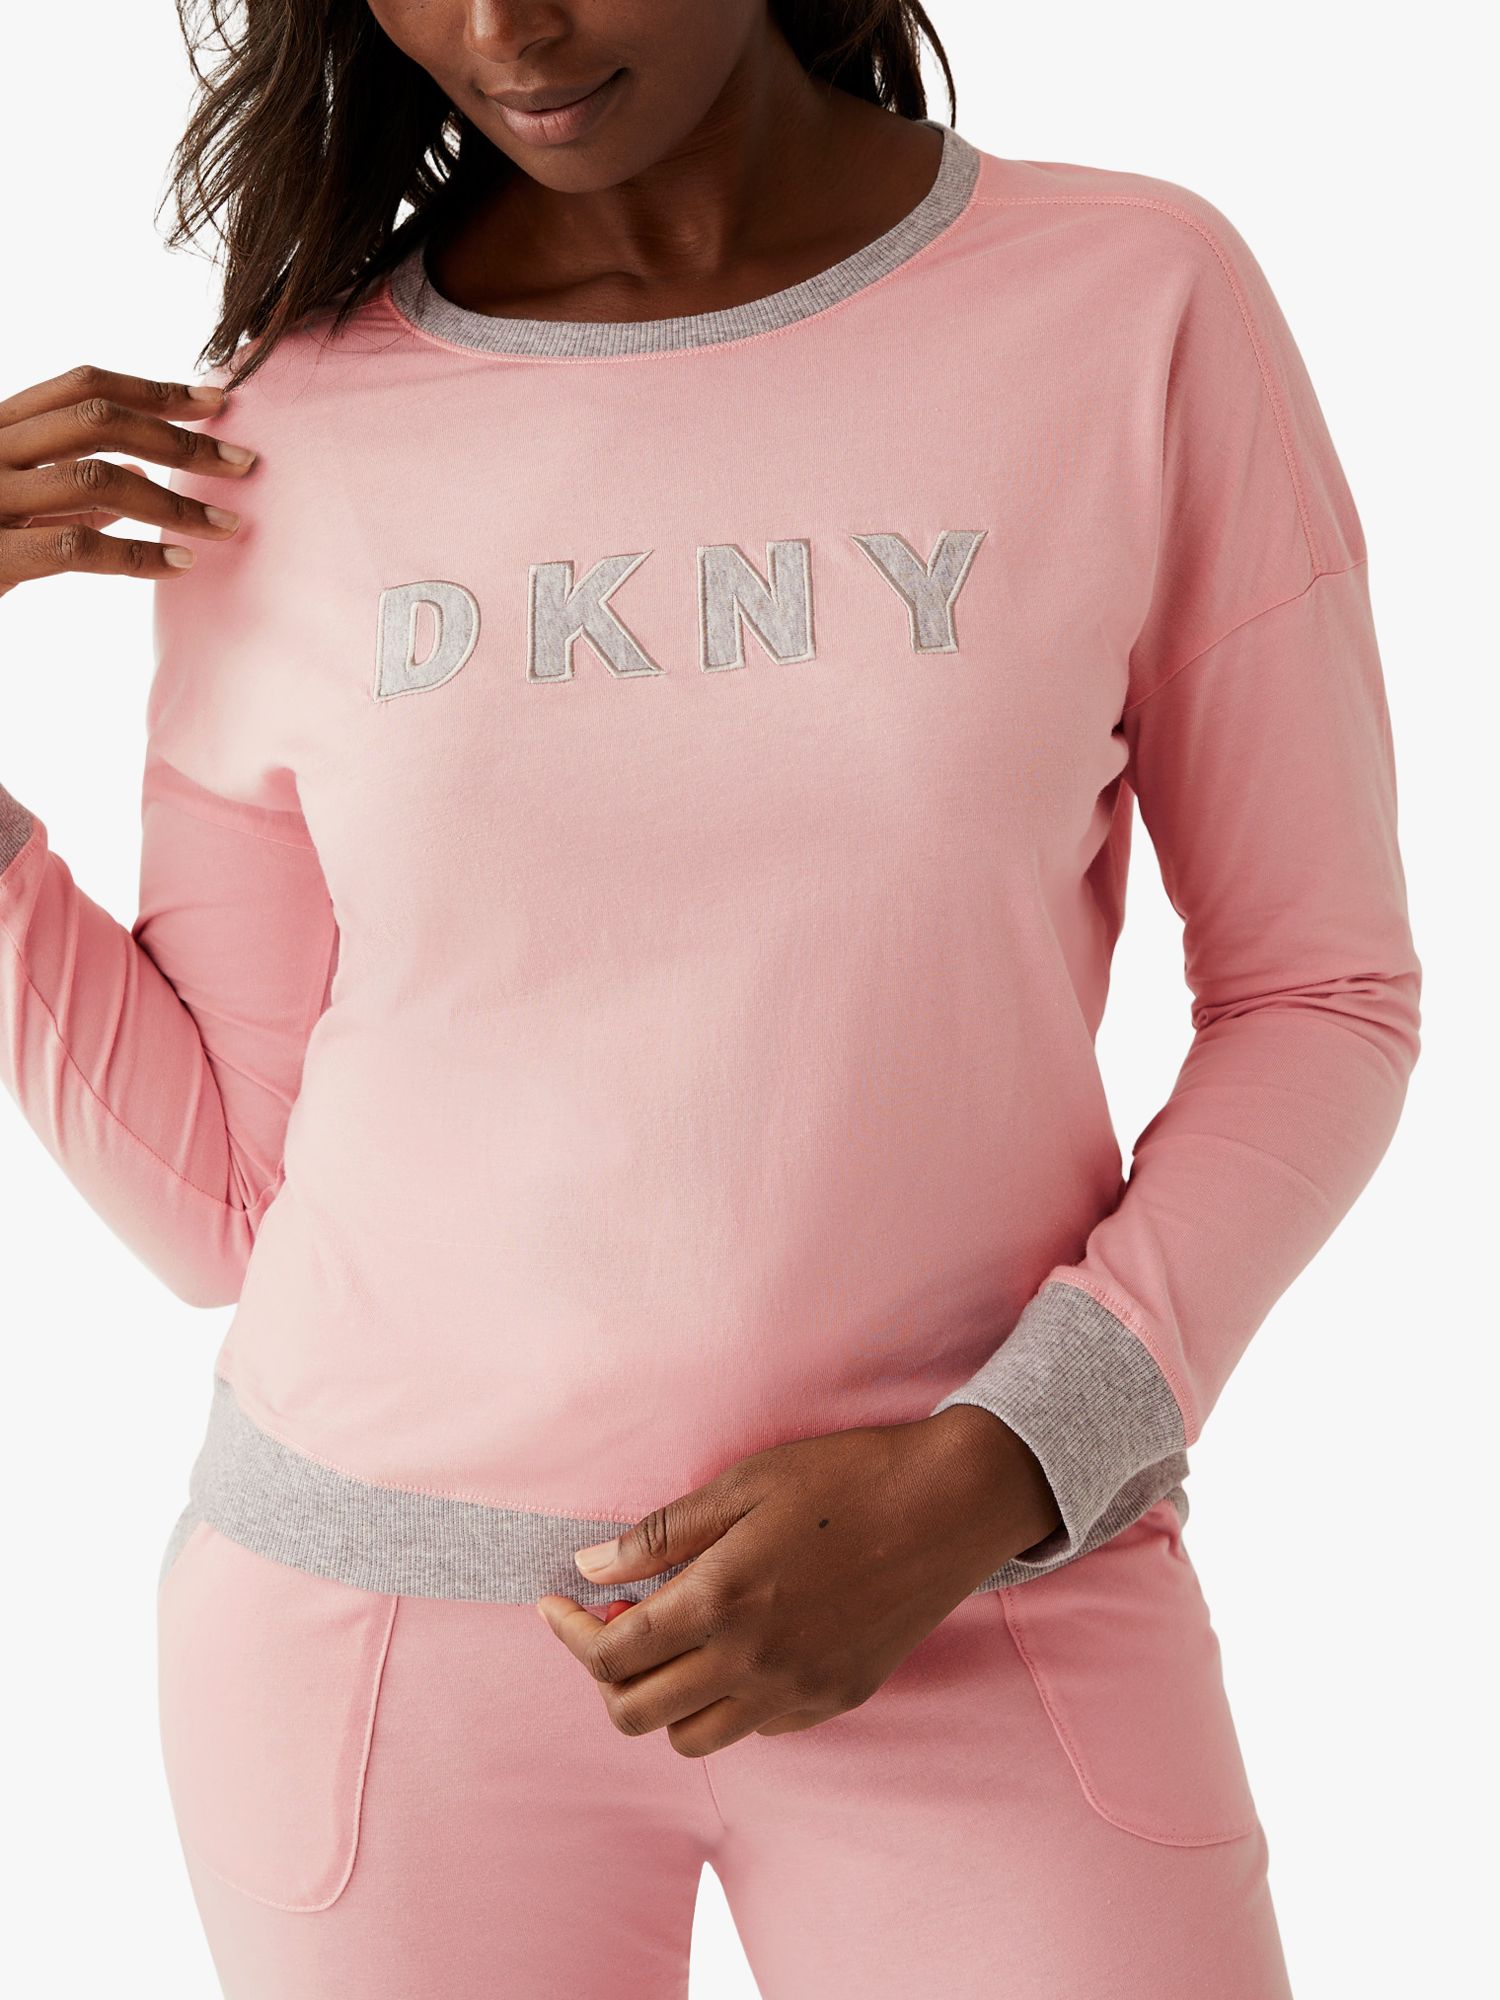 DKNY Shapewear Top Ladies S/M-2-pieces